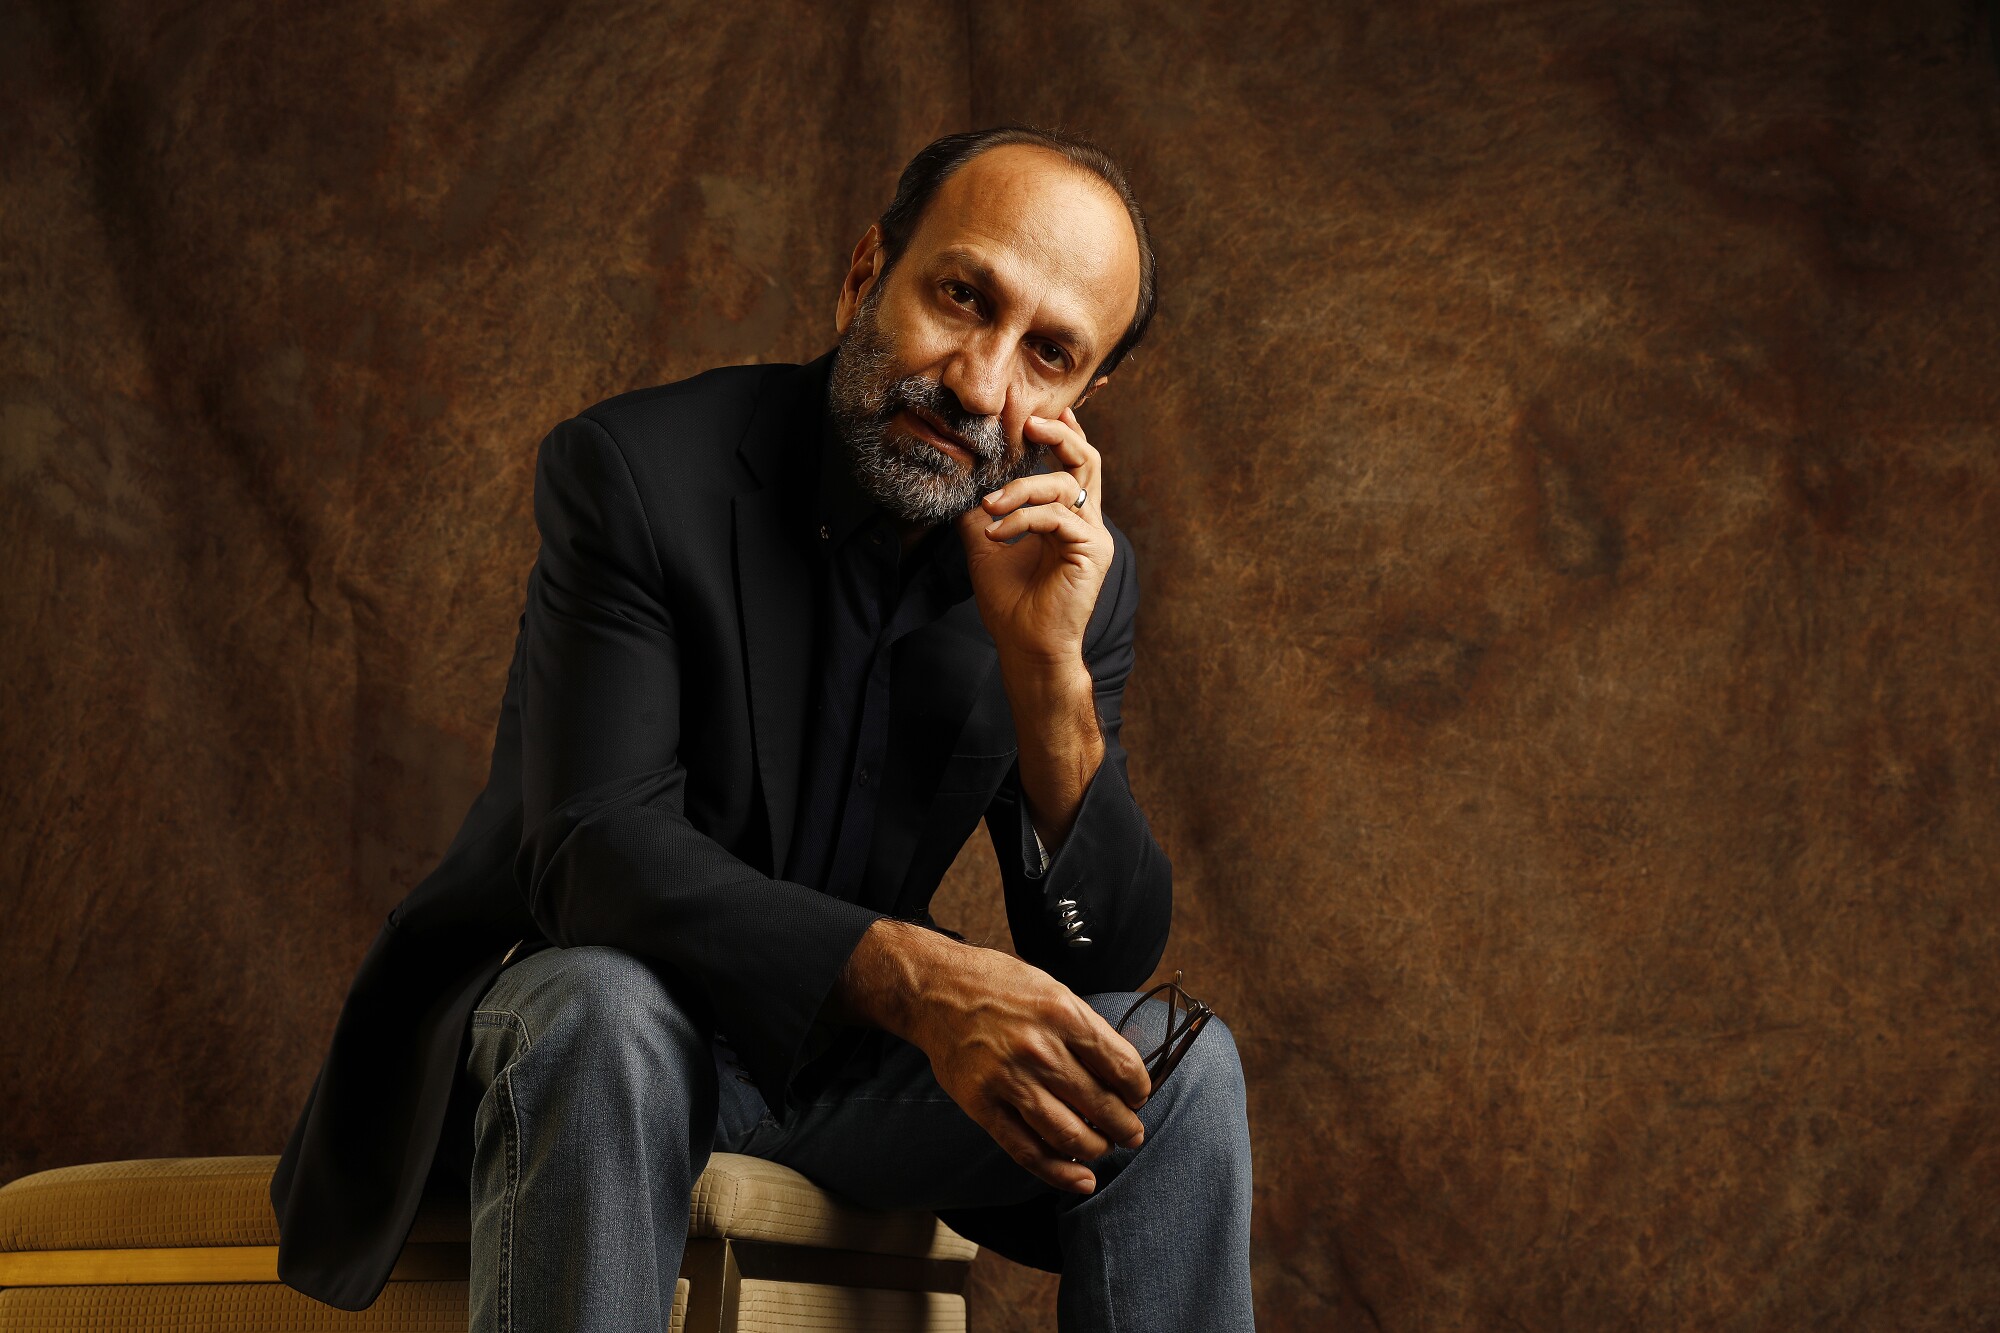  Director Asghar Farhadi, one of the premiere filmmakers in contemporary international cinema